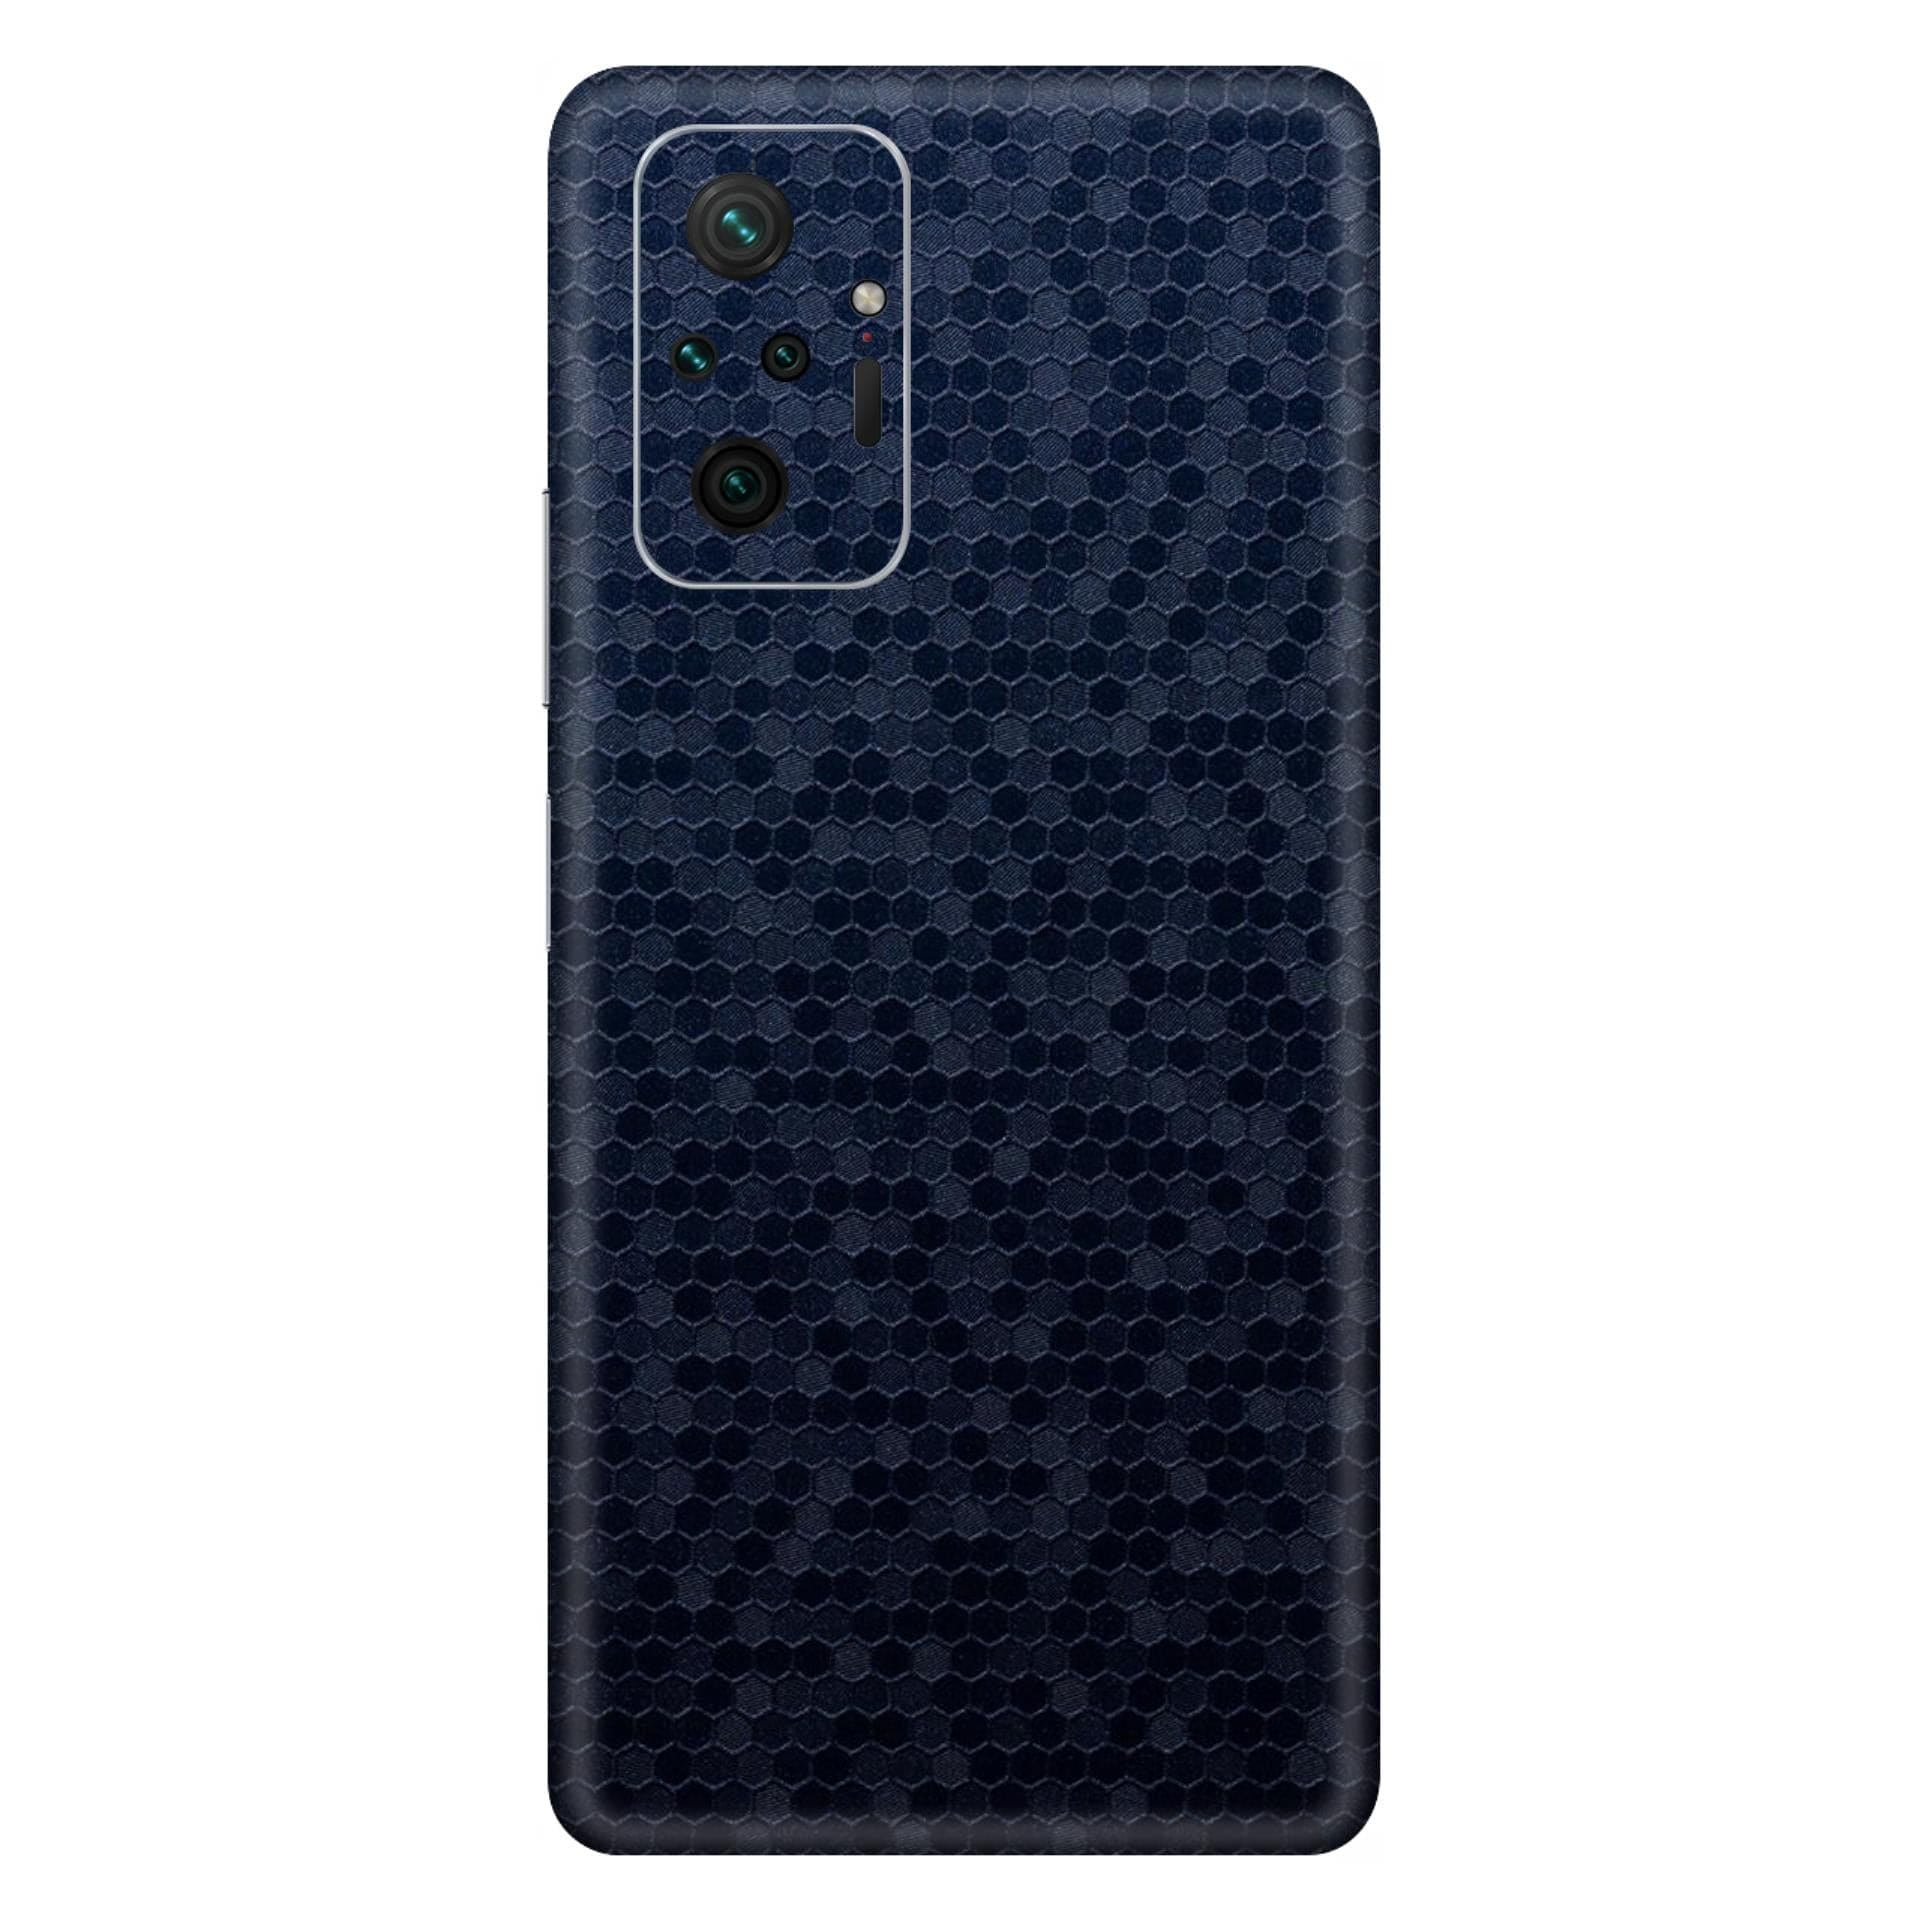 Redmi Note 10 Pro Max Honeycomb Blue skins